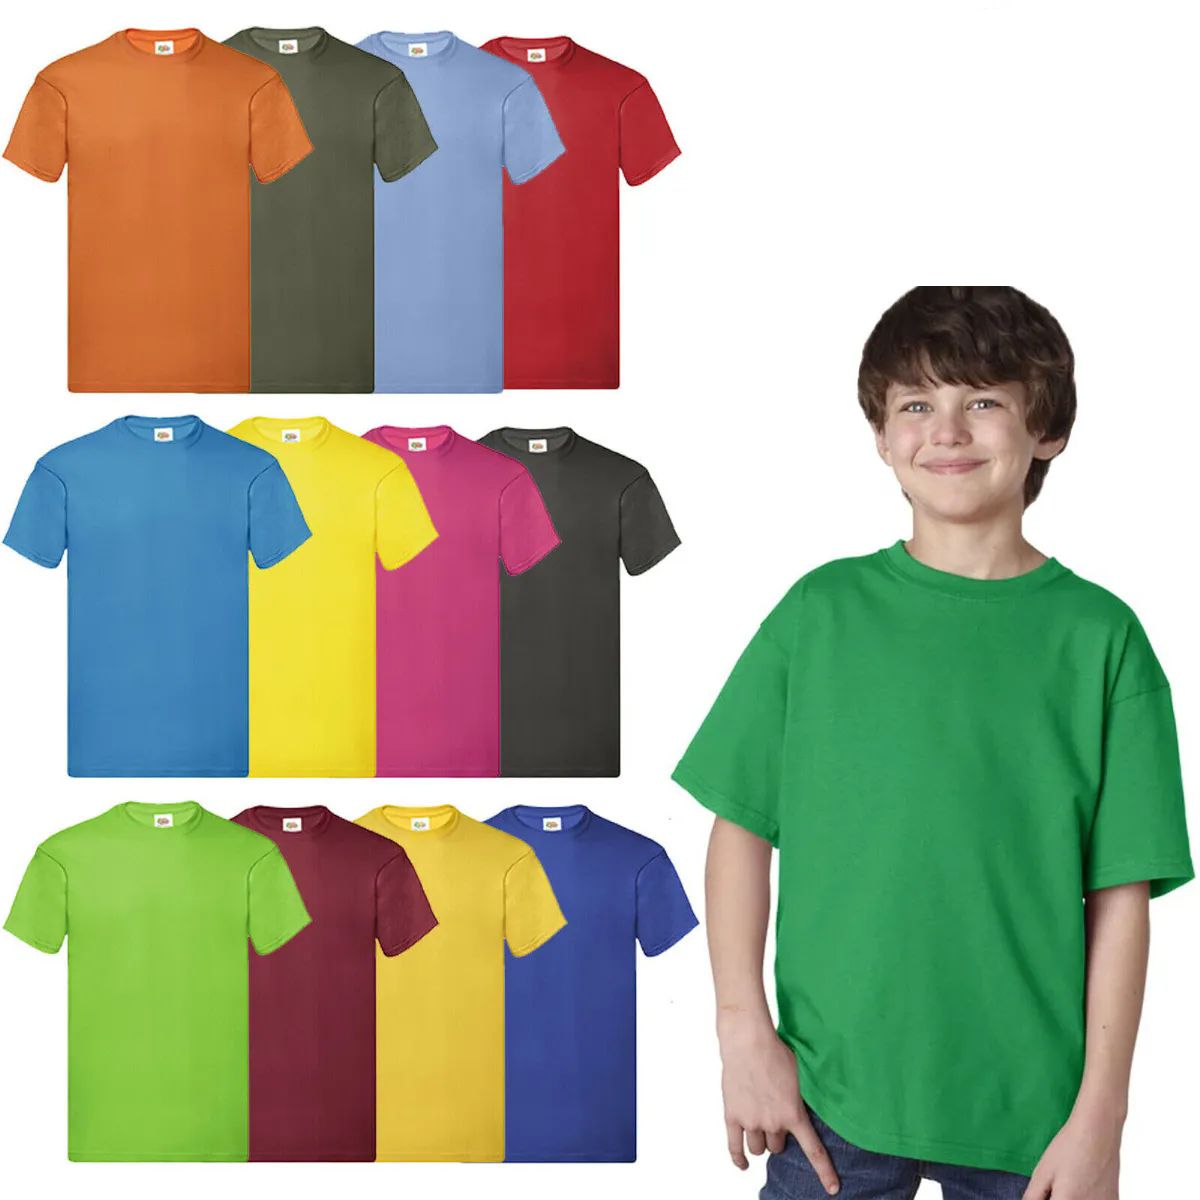 504 Bulk Billion Hats Kids Youth Cotton Assorted Colors T Shirts Size XL